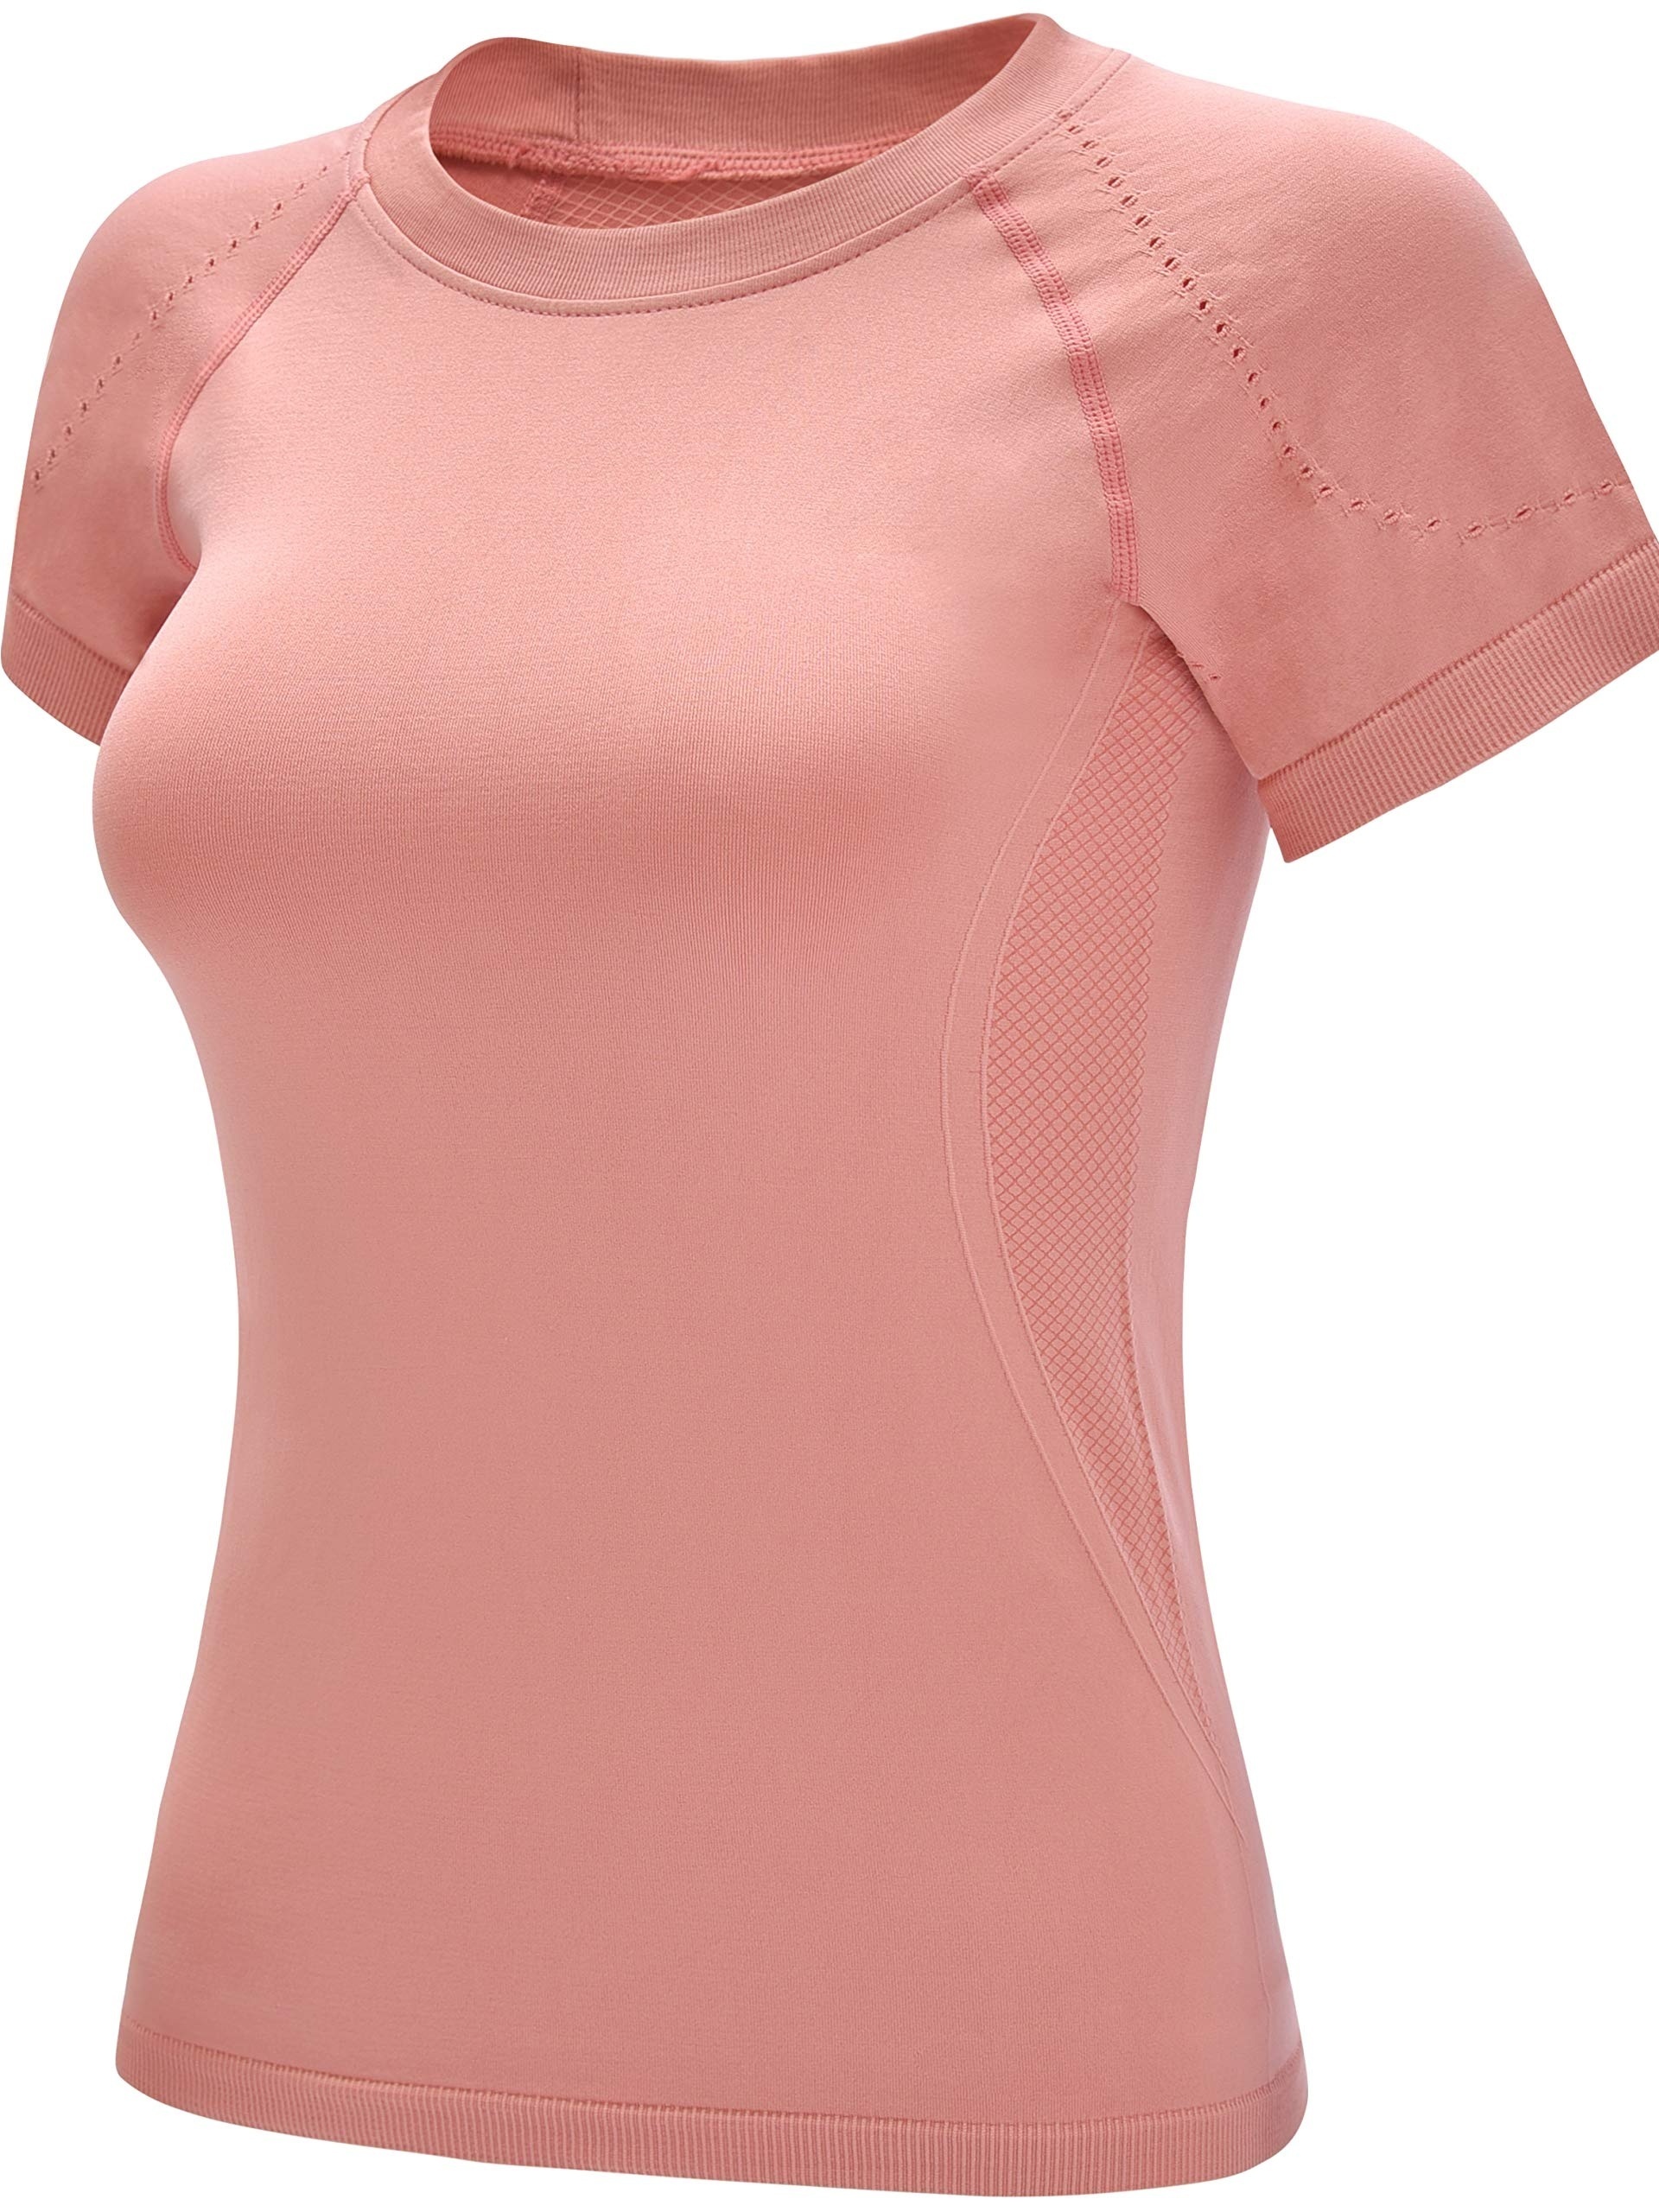 Apana, Tops, Apana New Womens Activewear Top Yoga Pink Short Sleeve Vneck  Size S